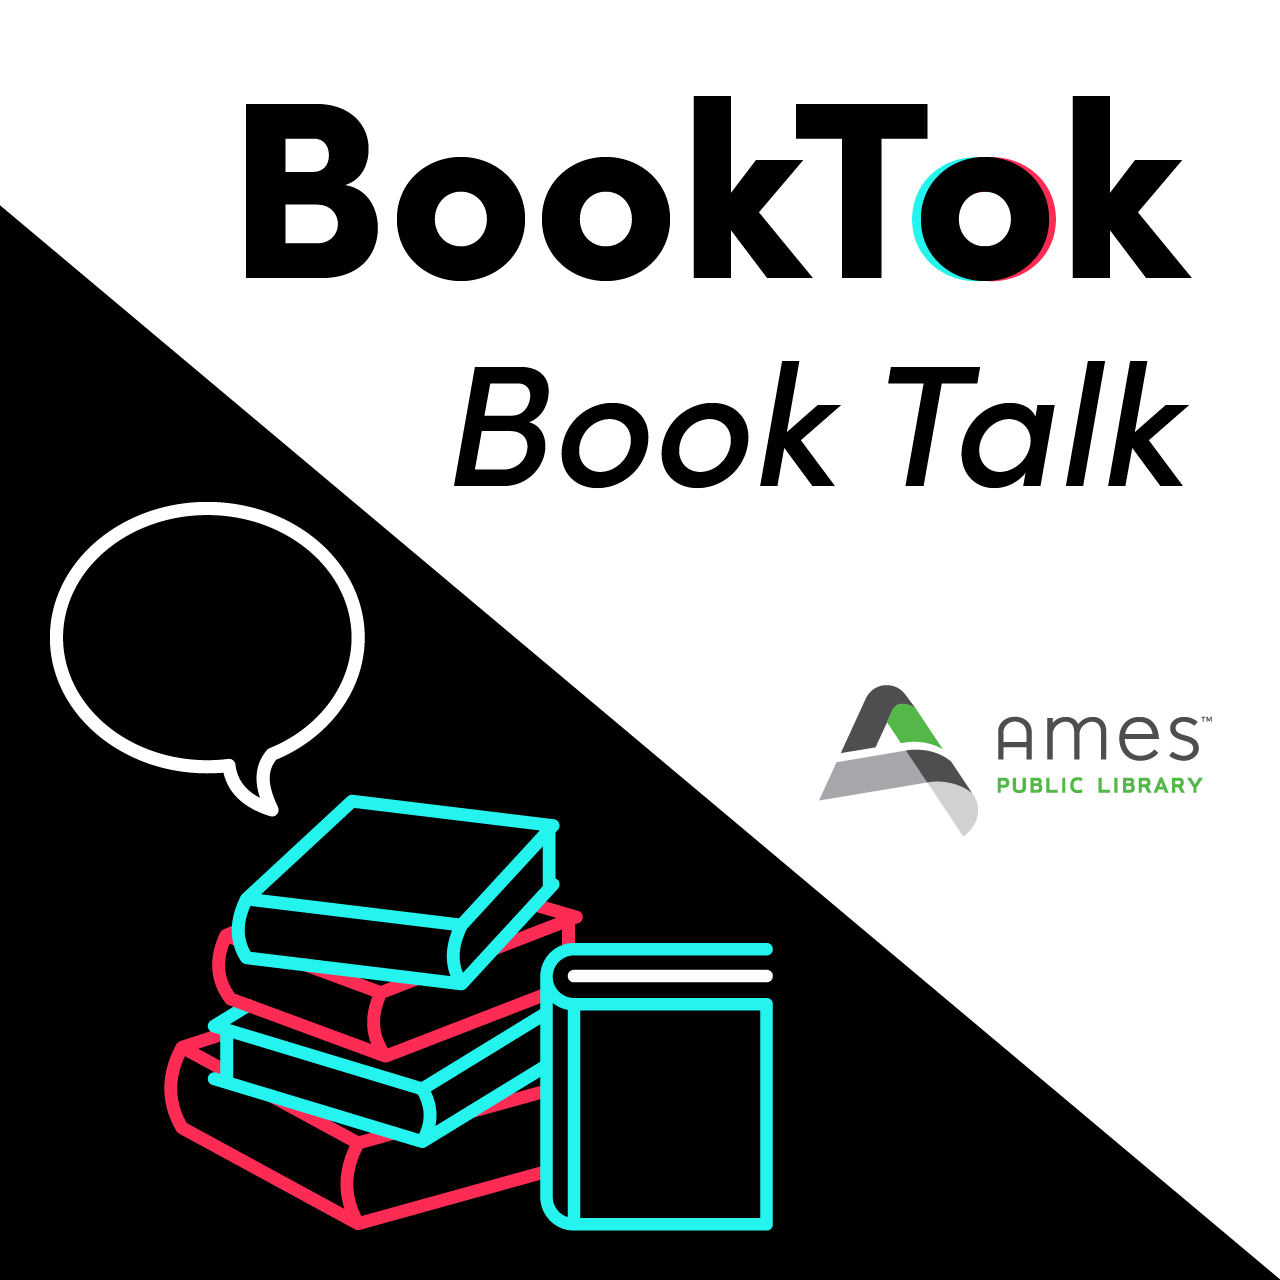 BookTok Book Talk